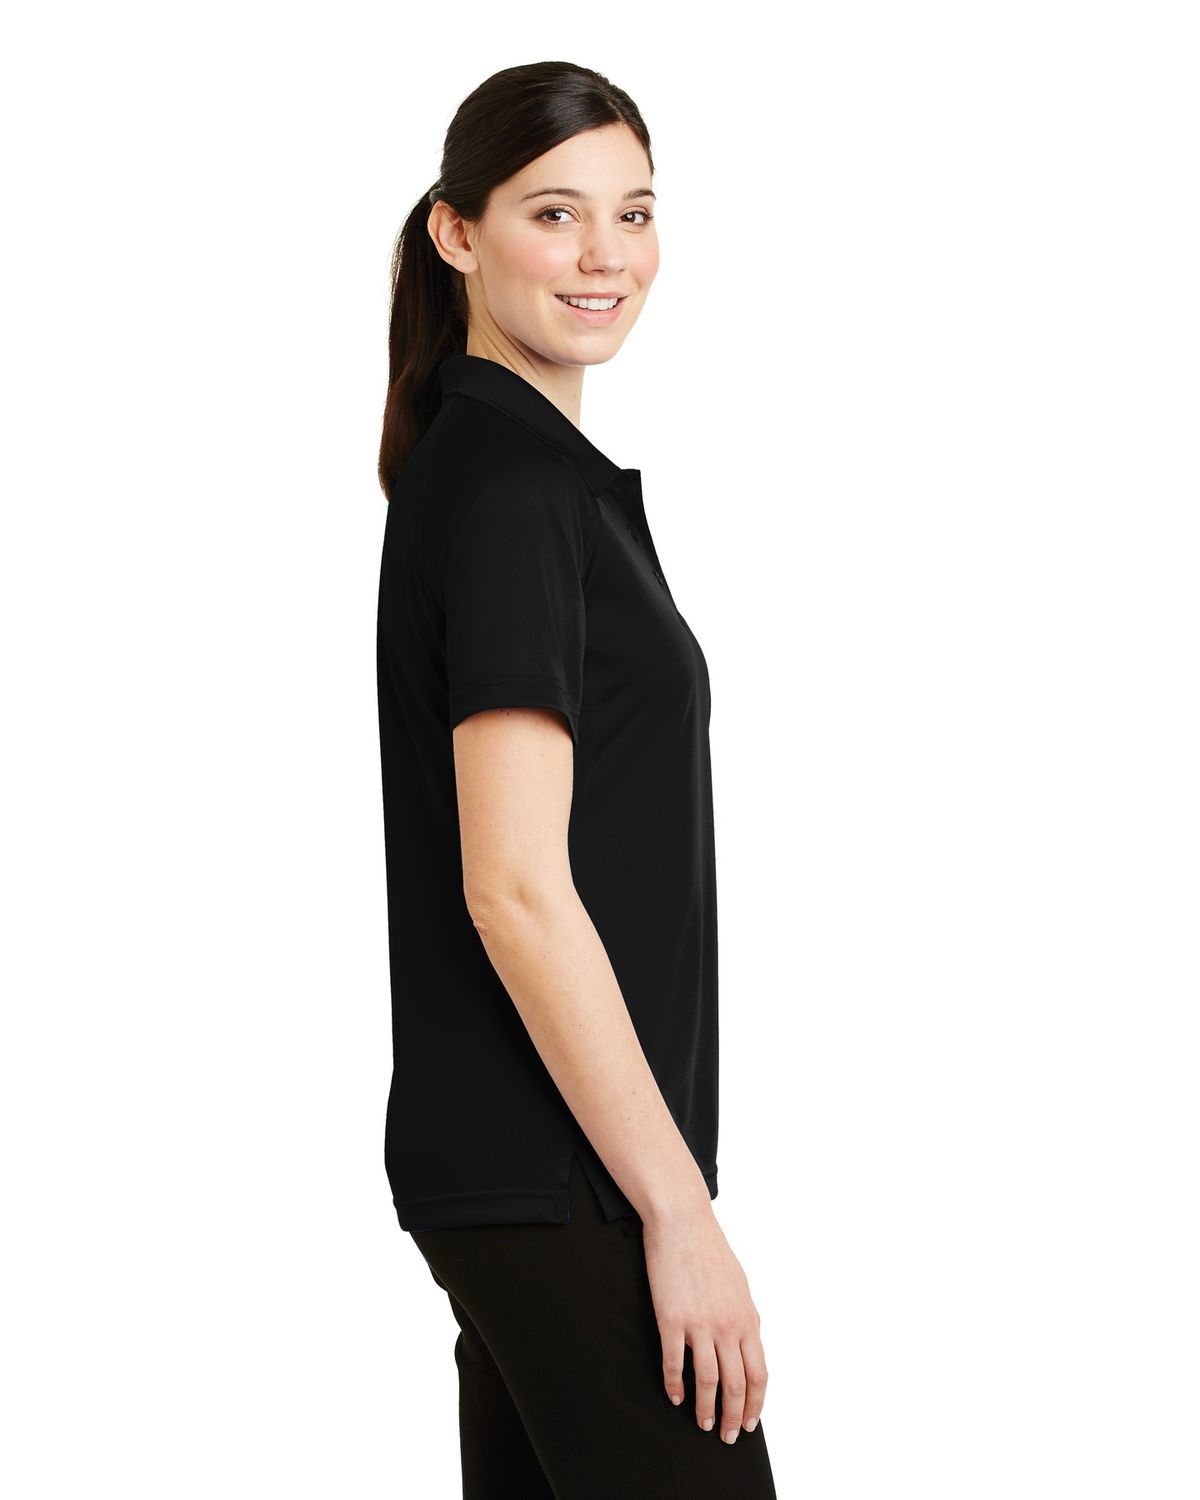 'CornerStone CS411 Ladies Select Snag Proof Tactical Polo Shirt'